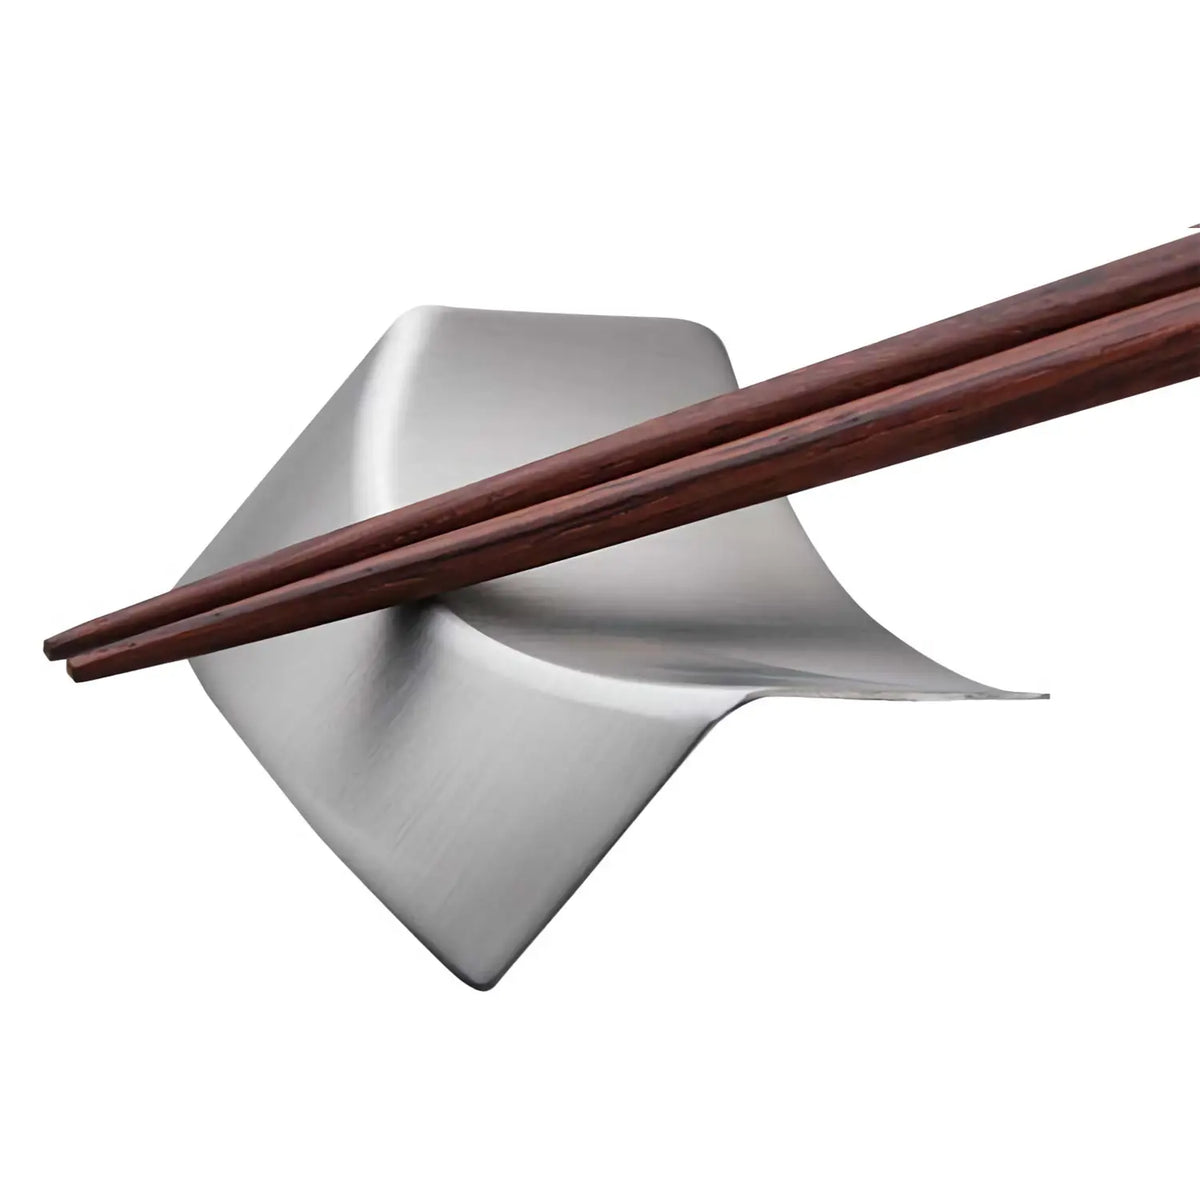 LUCKYWOOD ORI Stainless Steel Chopstick Rest